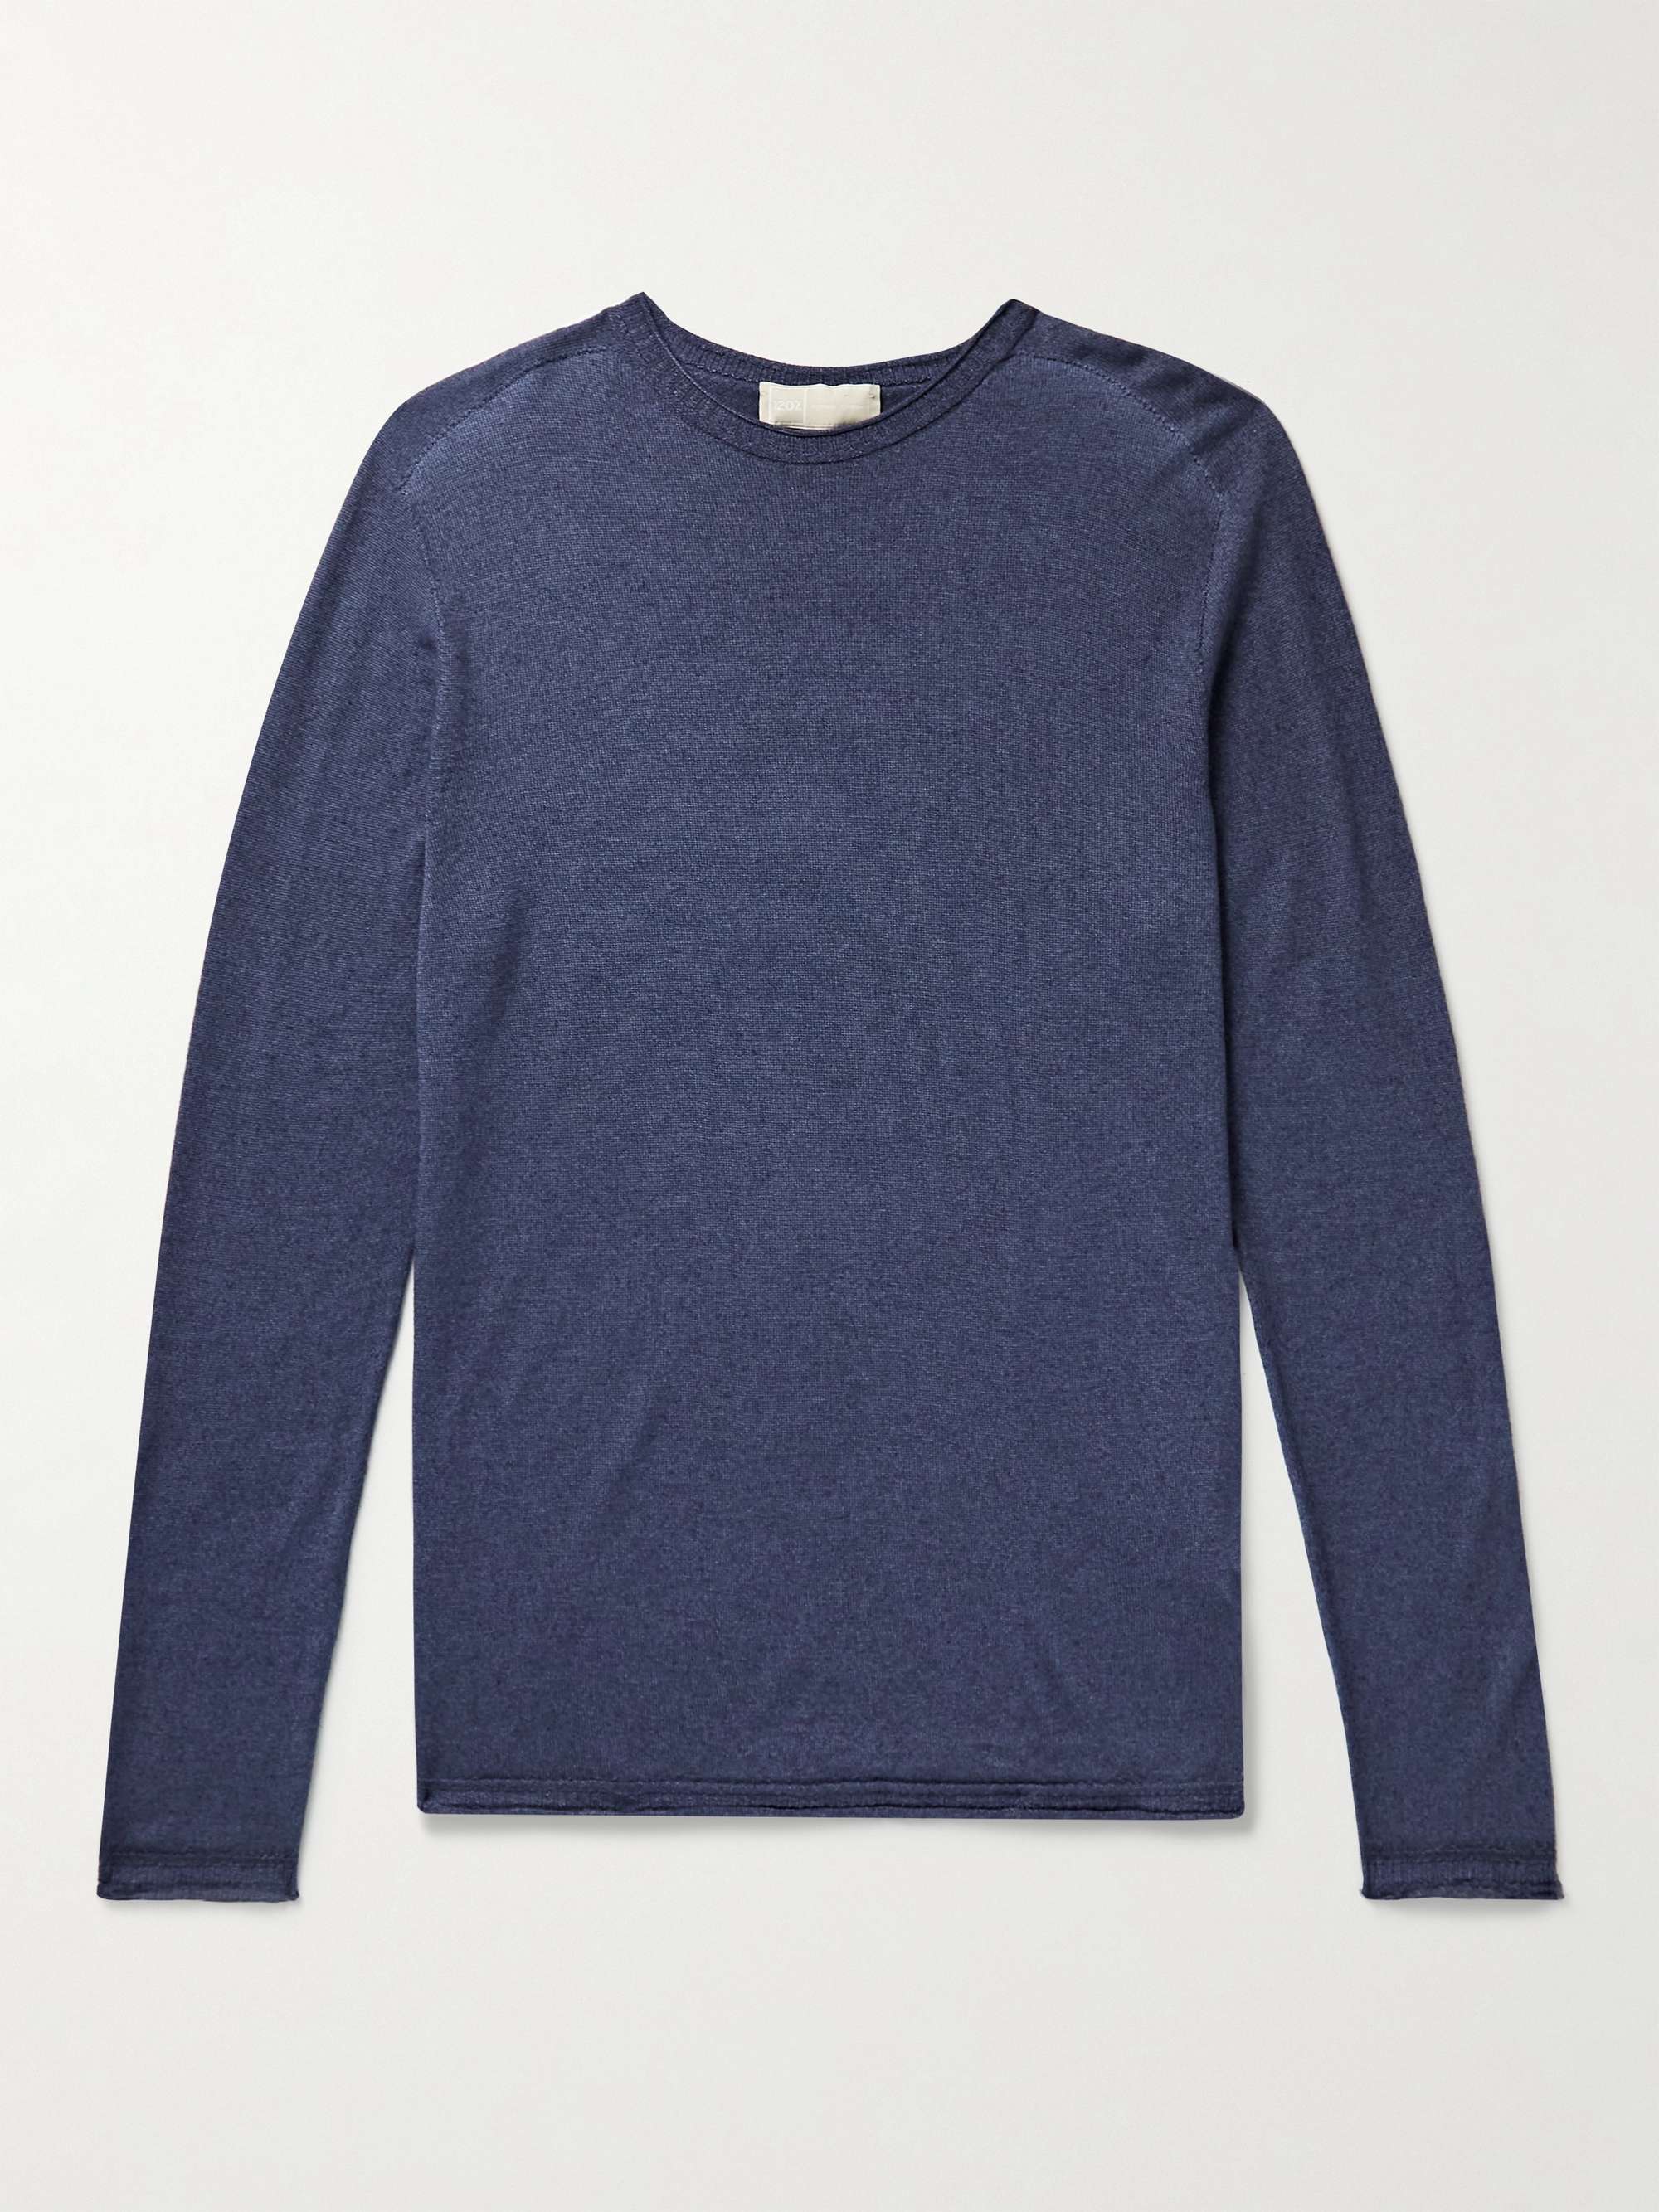 120% Slim-Fit Cashmere Sweater